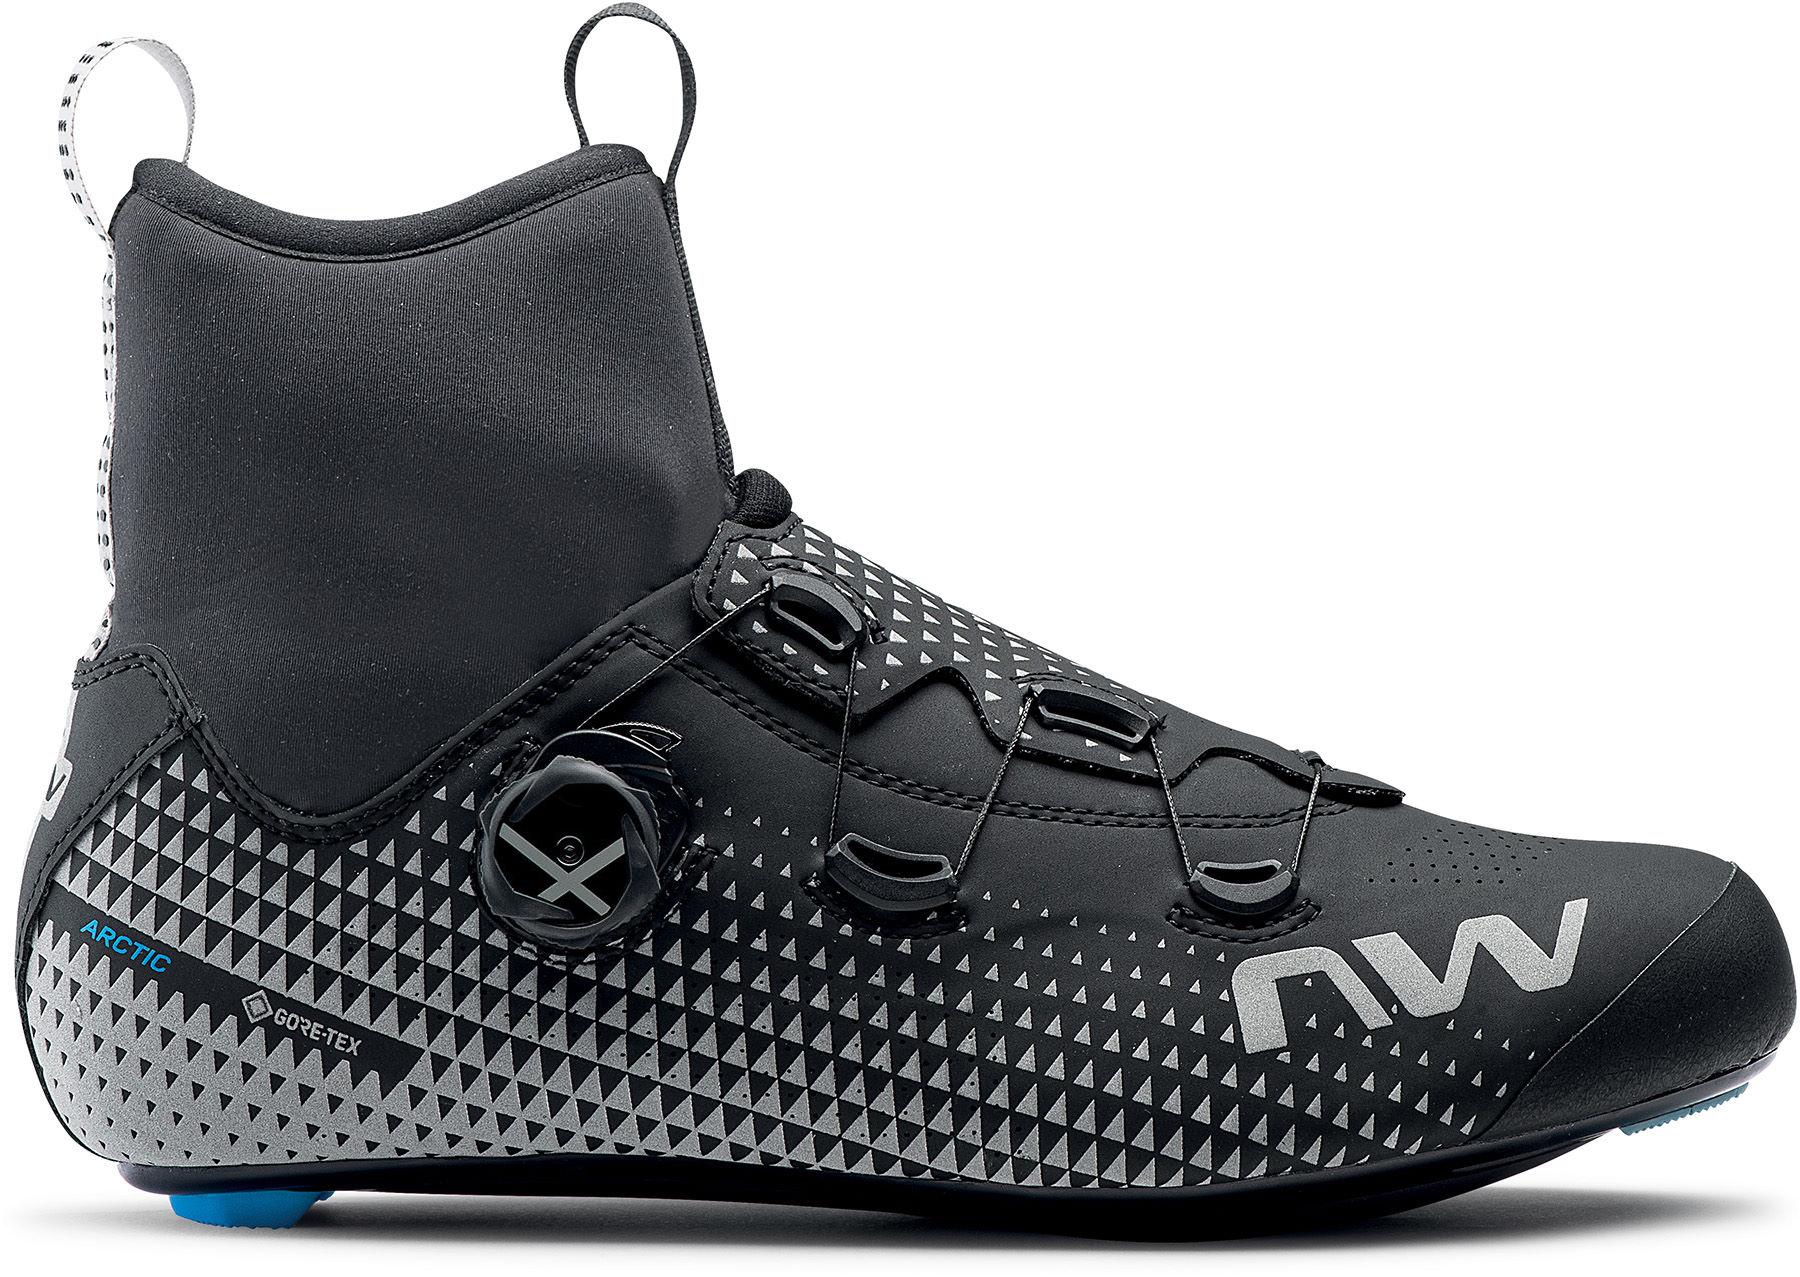 Northwave Celsius R Arctic Gtx Winter Boots - Black/reflective